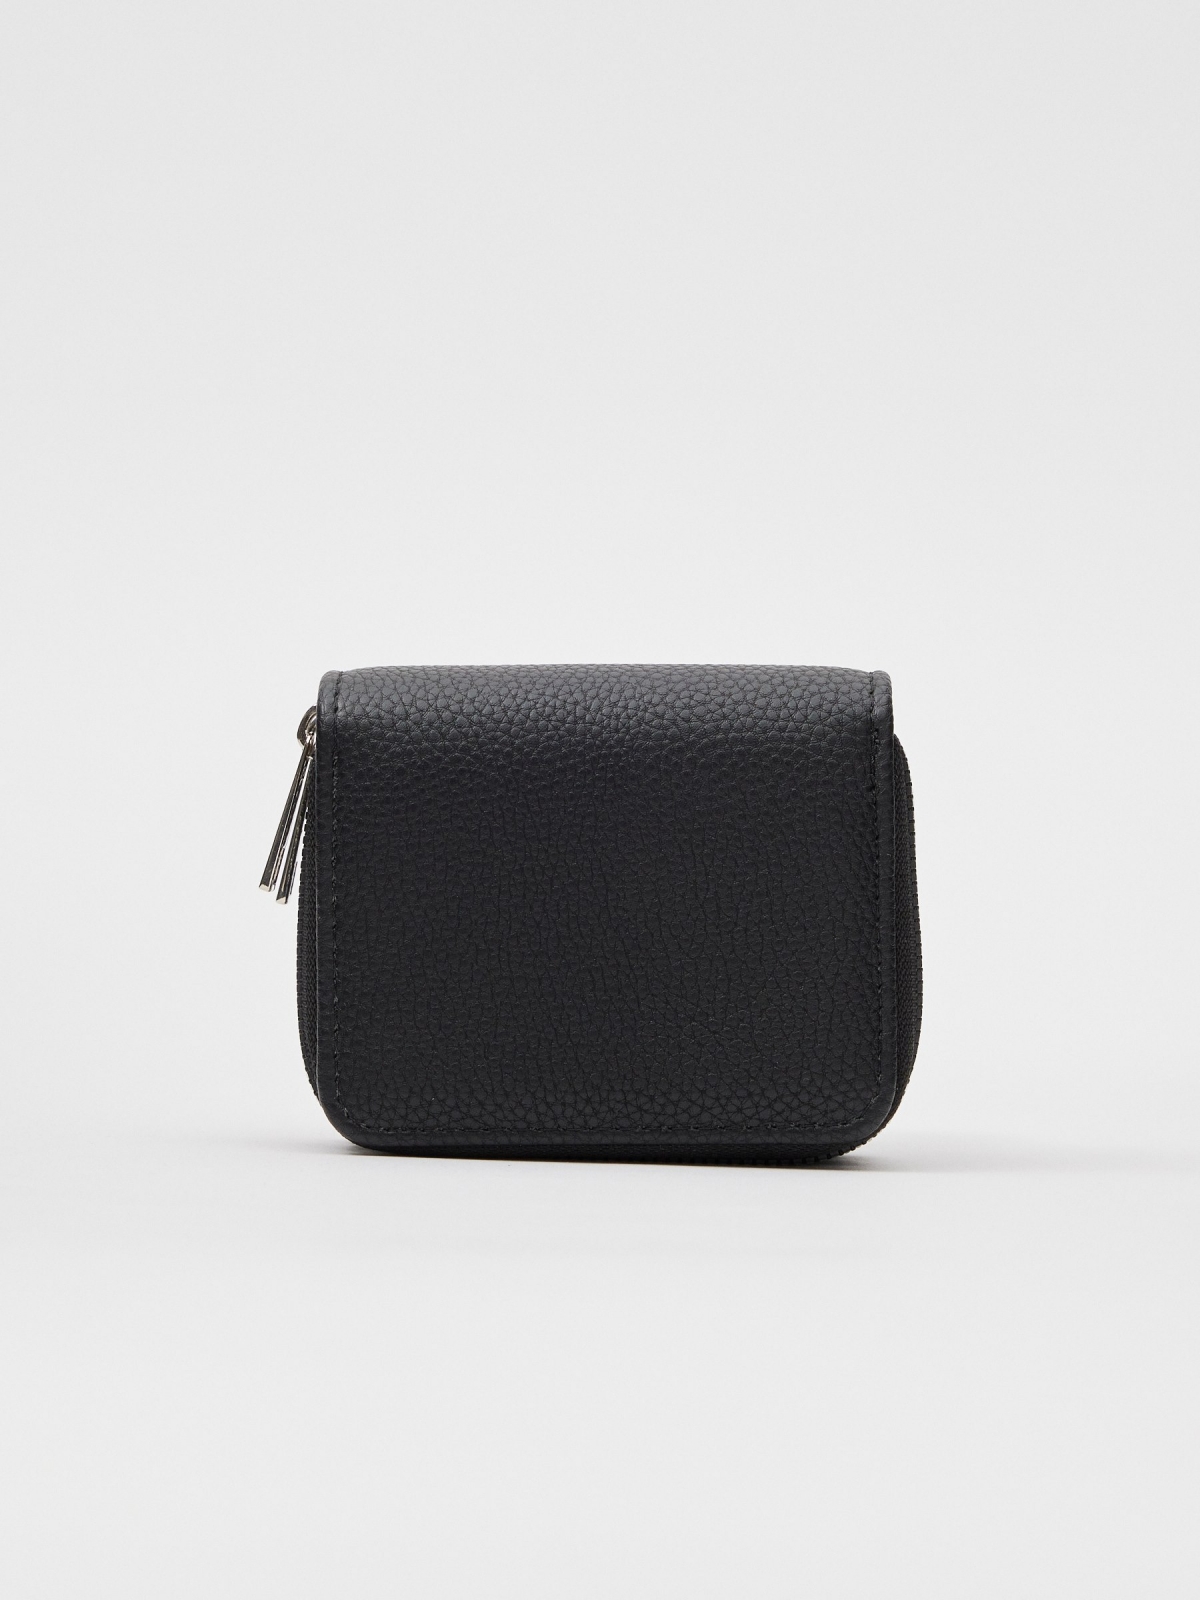 Black textured leatherette wallet black